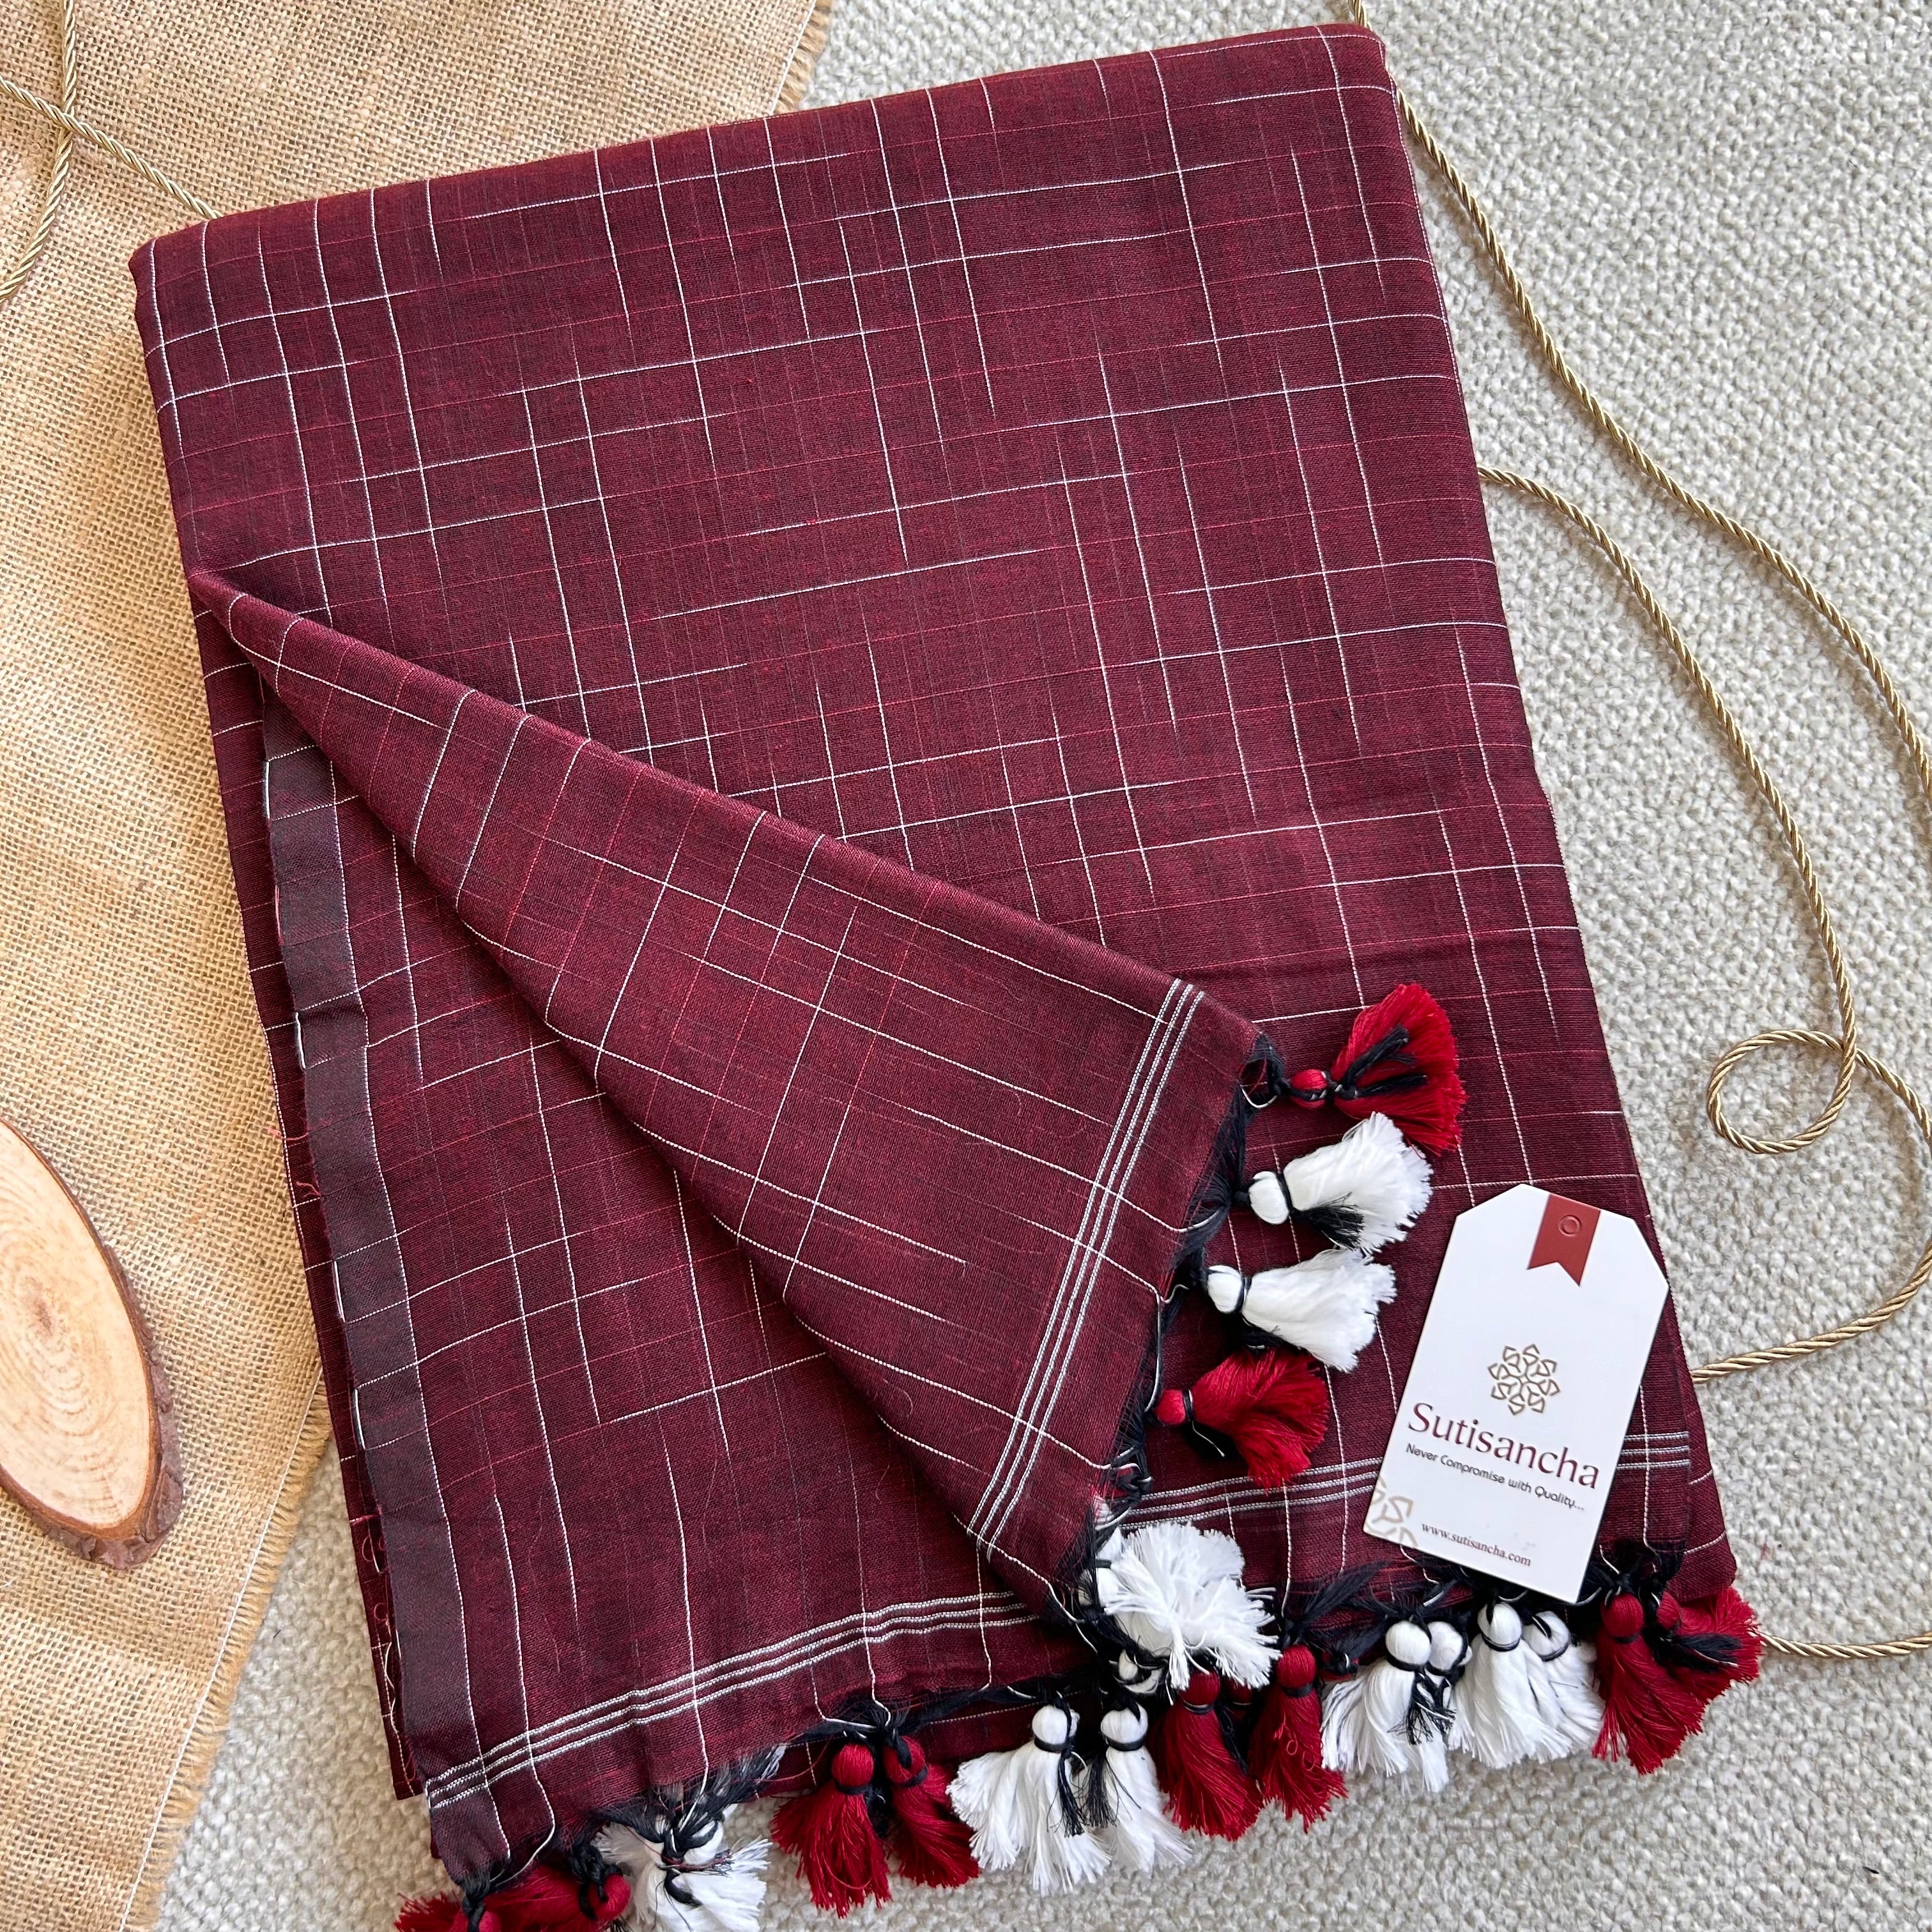 Sutisancha Maroon Handloom Cotton Saree with Trendy Kotki Checks Design